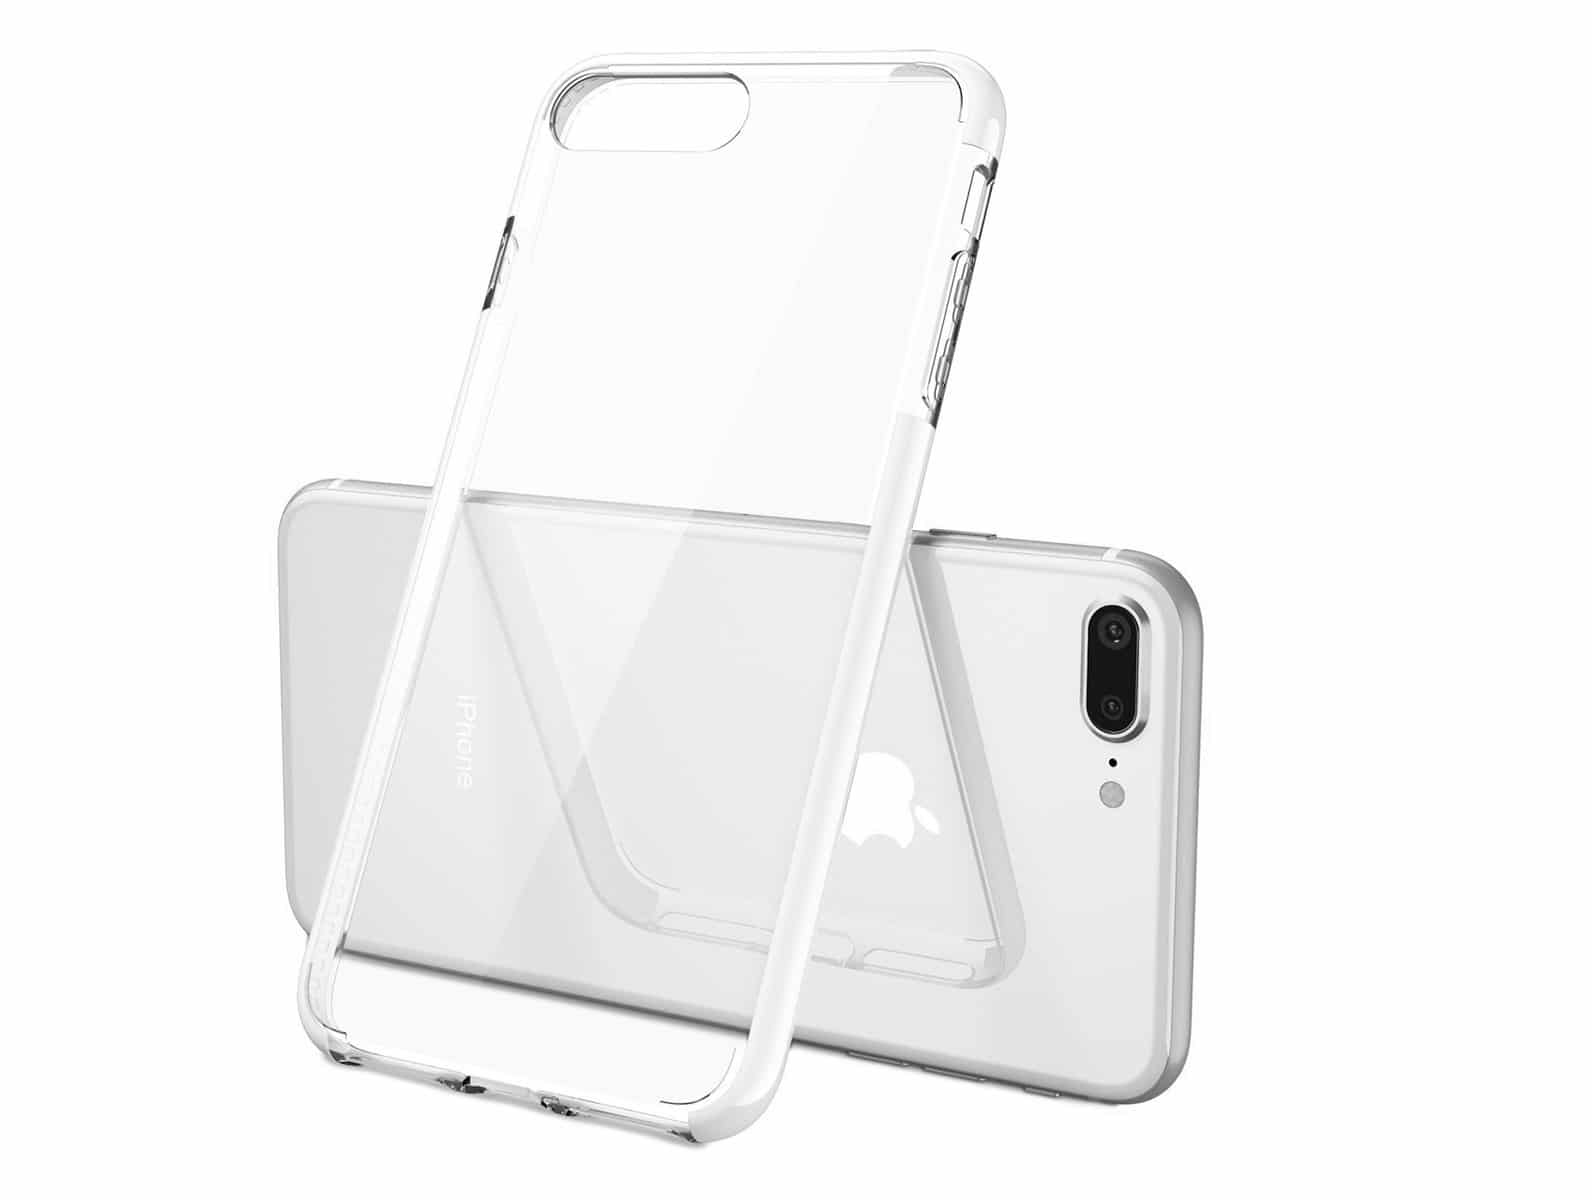 iFend Clear iPhone case